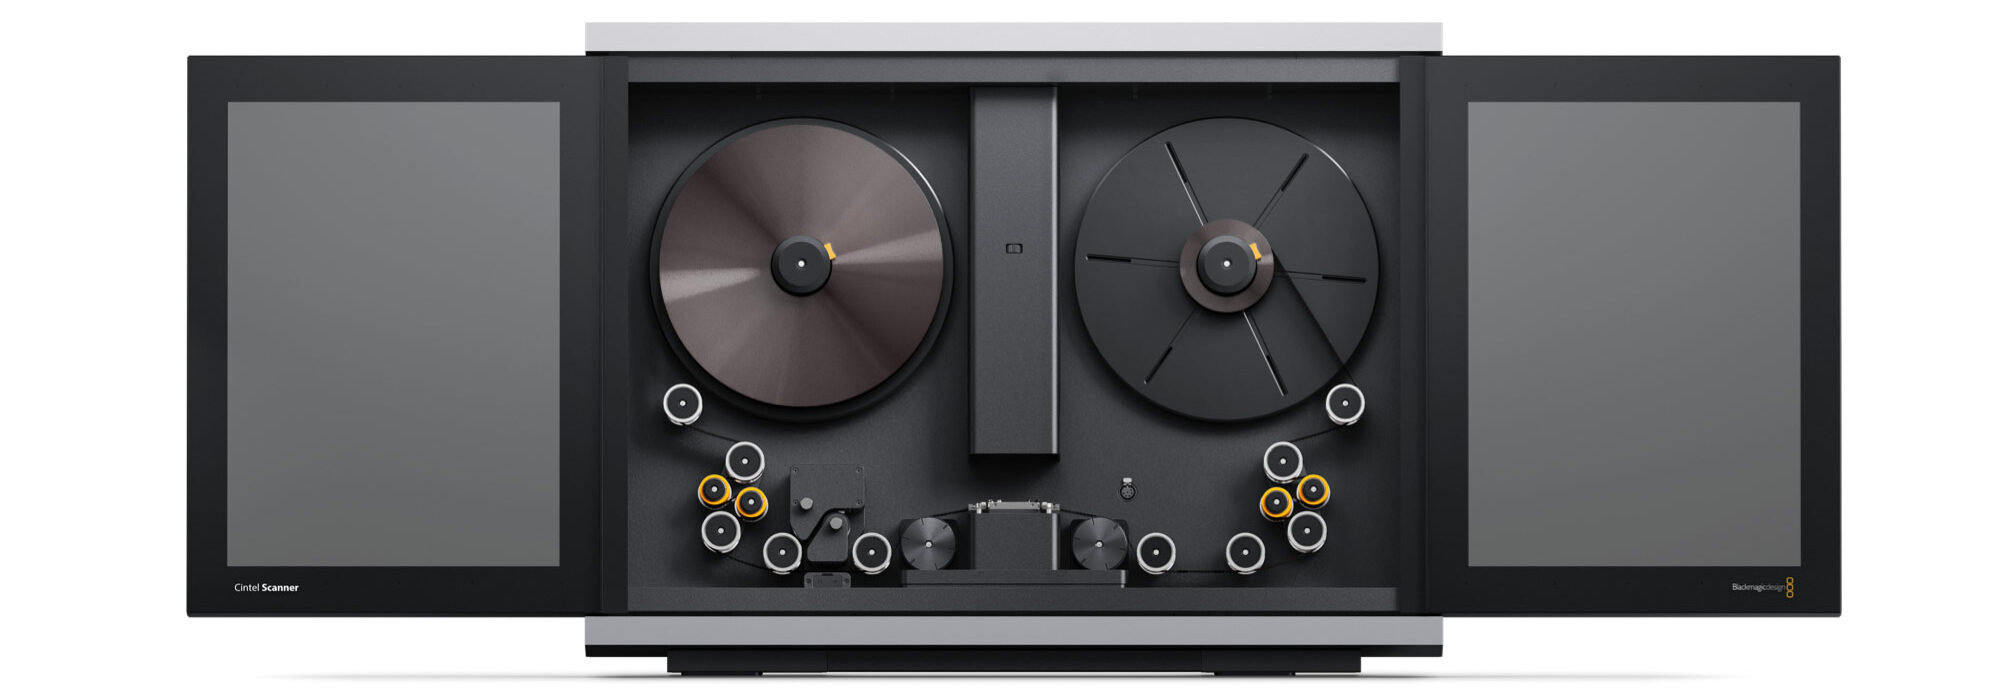 Blackmagic Design Announces New Cintel Scanner G3 HDR+